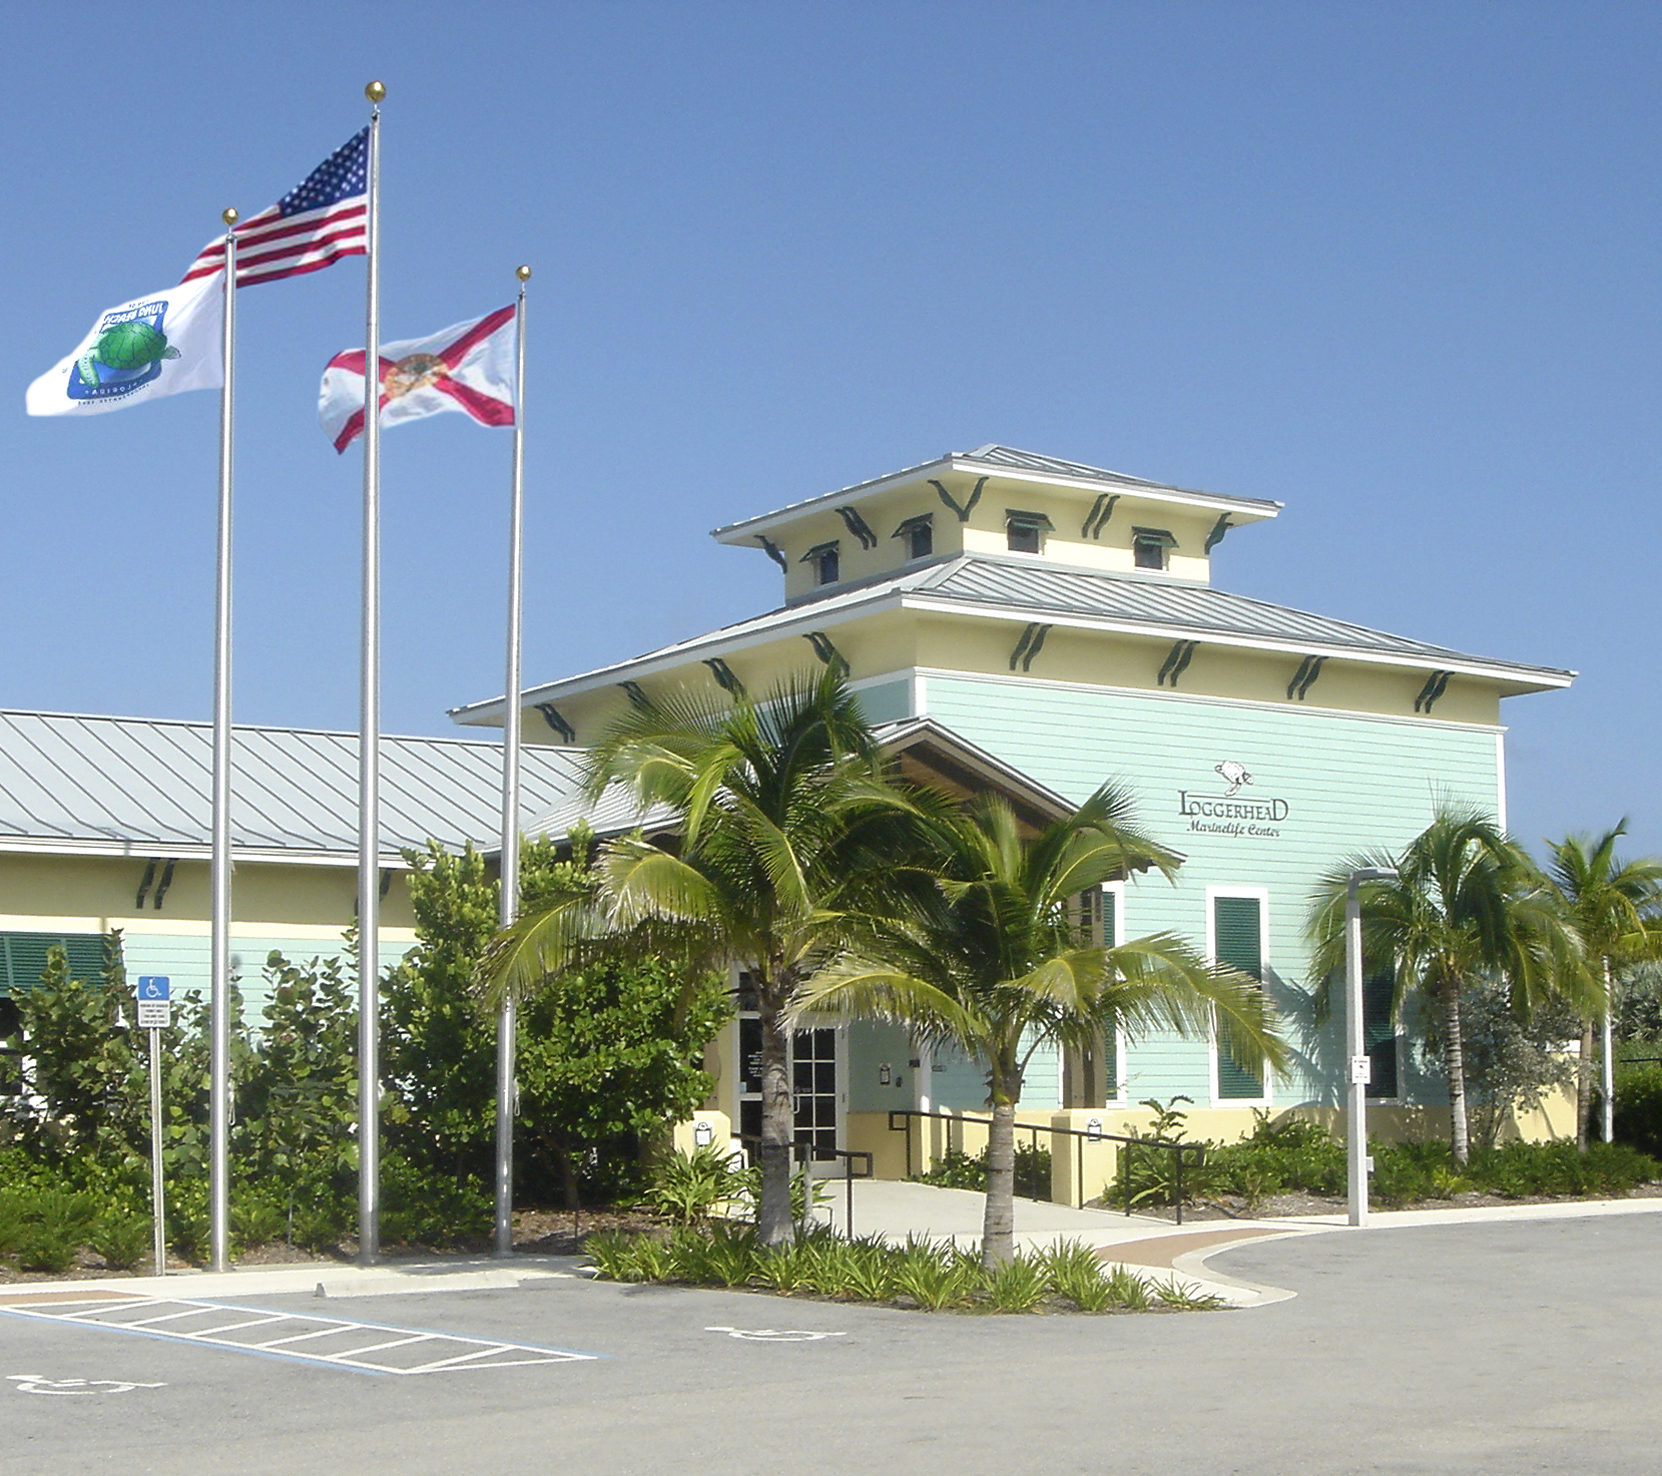 Loggerhead Marine Life Center Florida Green Building Juno Beach Florida Entry.jpg